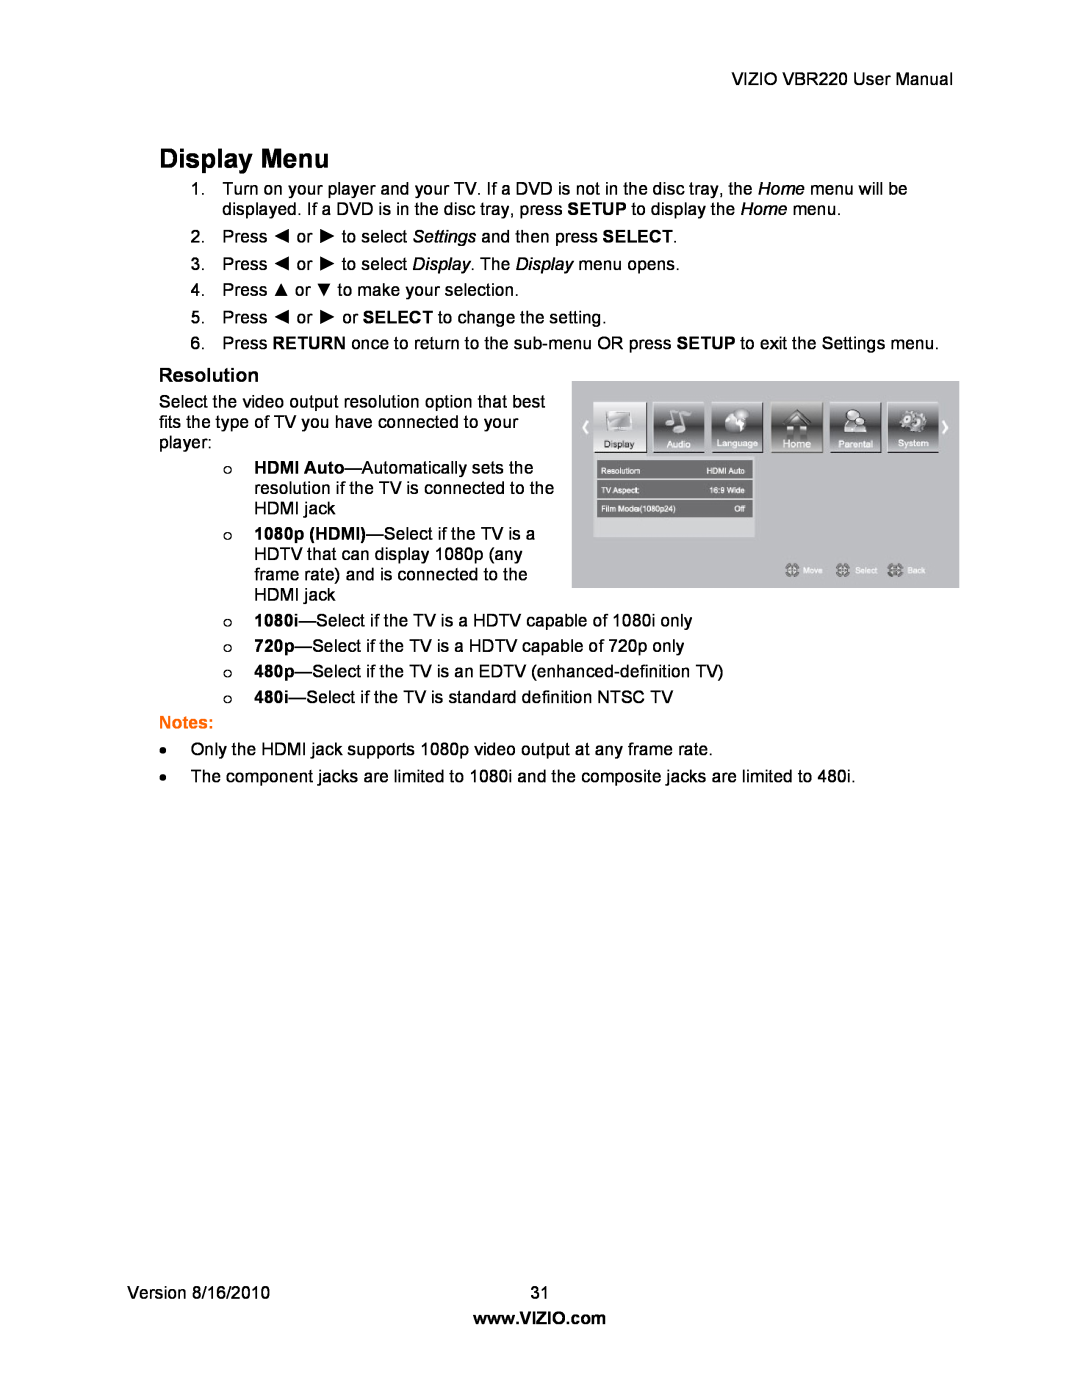 Panasonic VBR220 user manual Display Menu, Resolution 